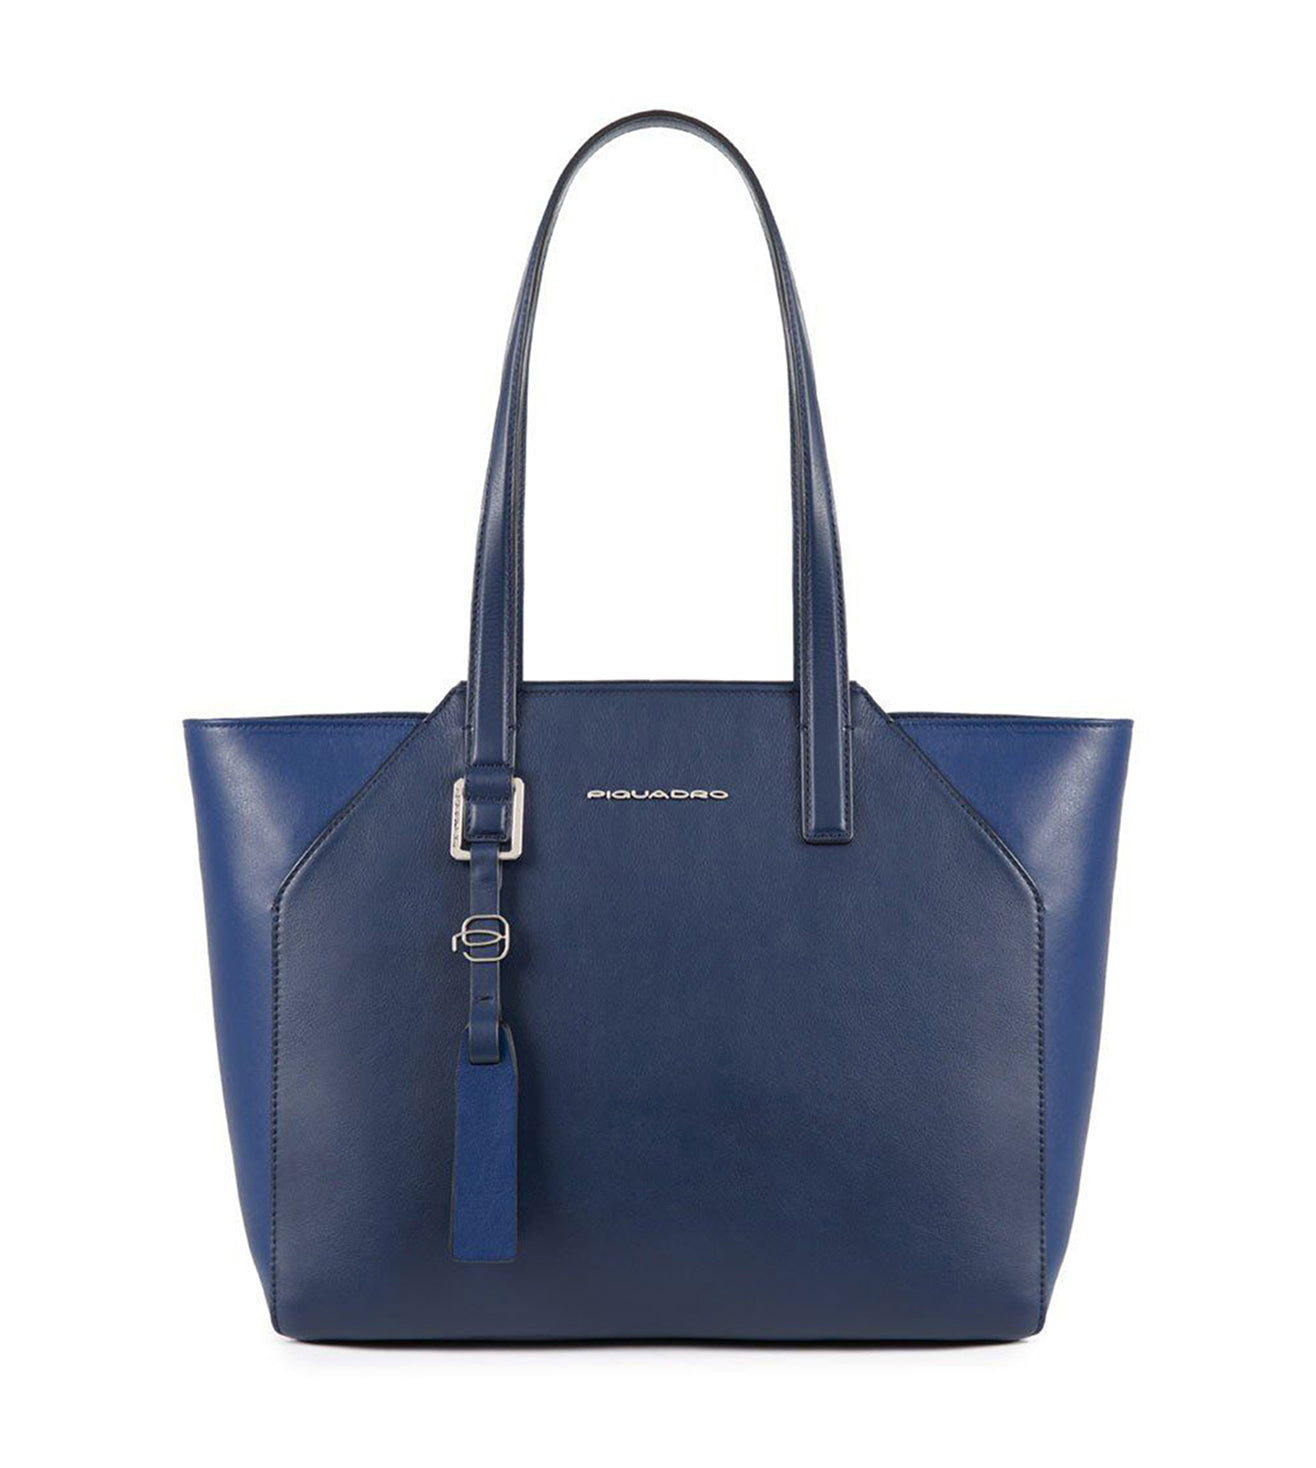 Piquadro Muse Women's Handbag